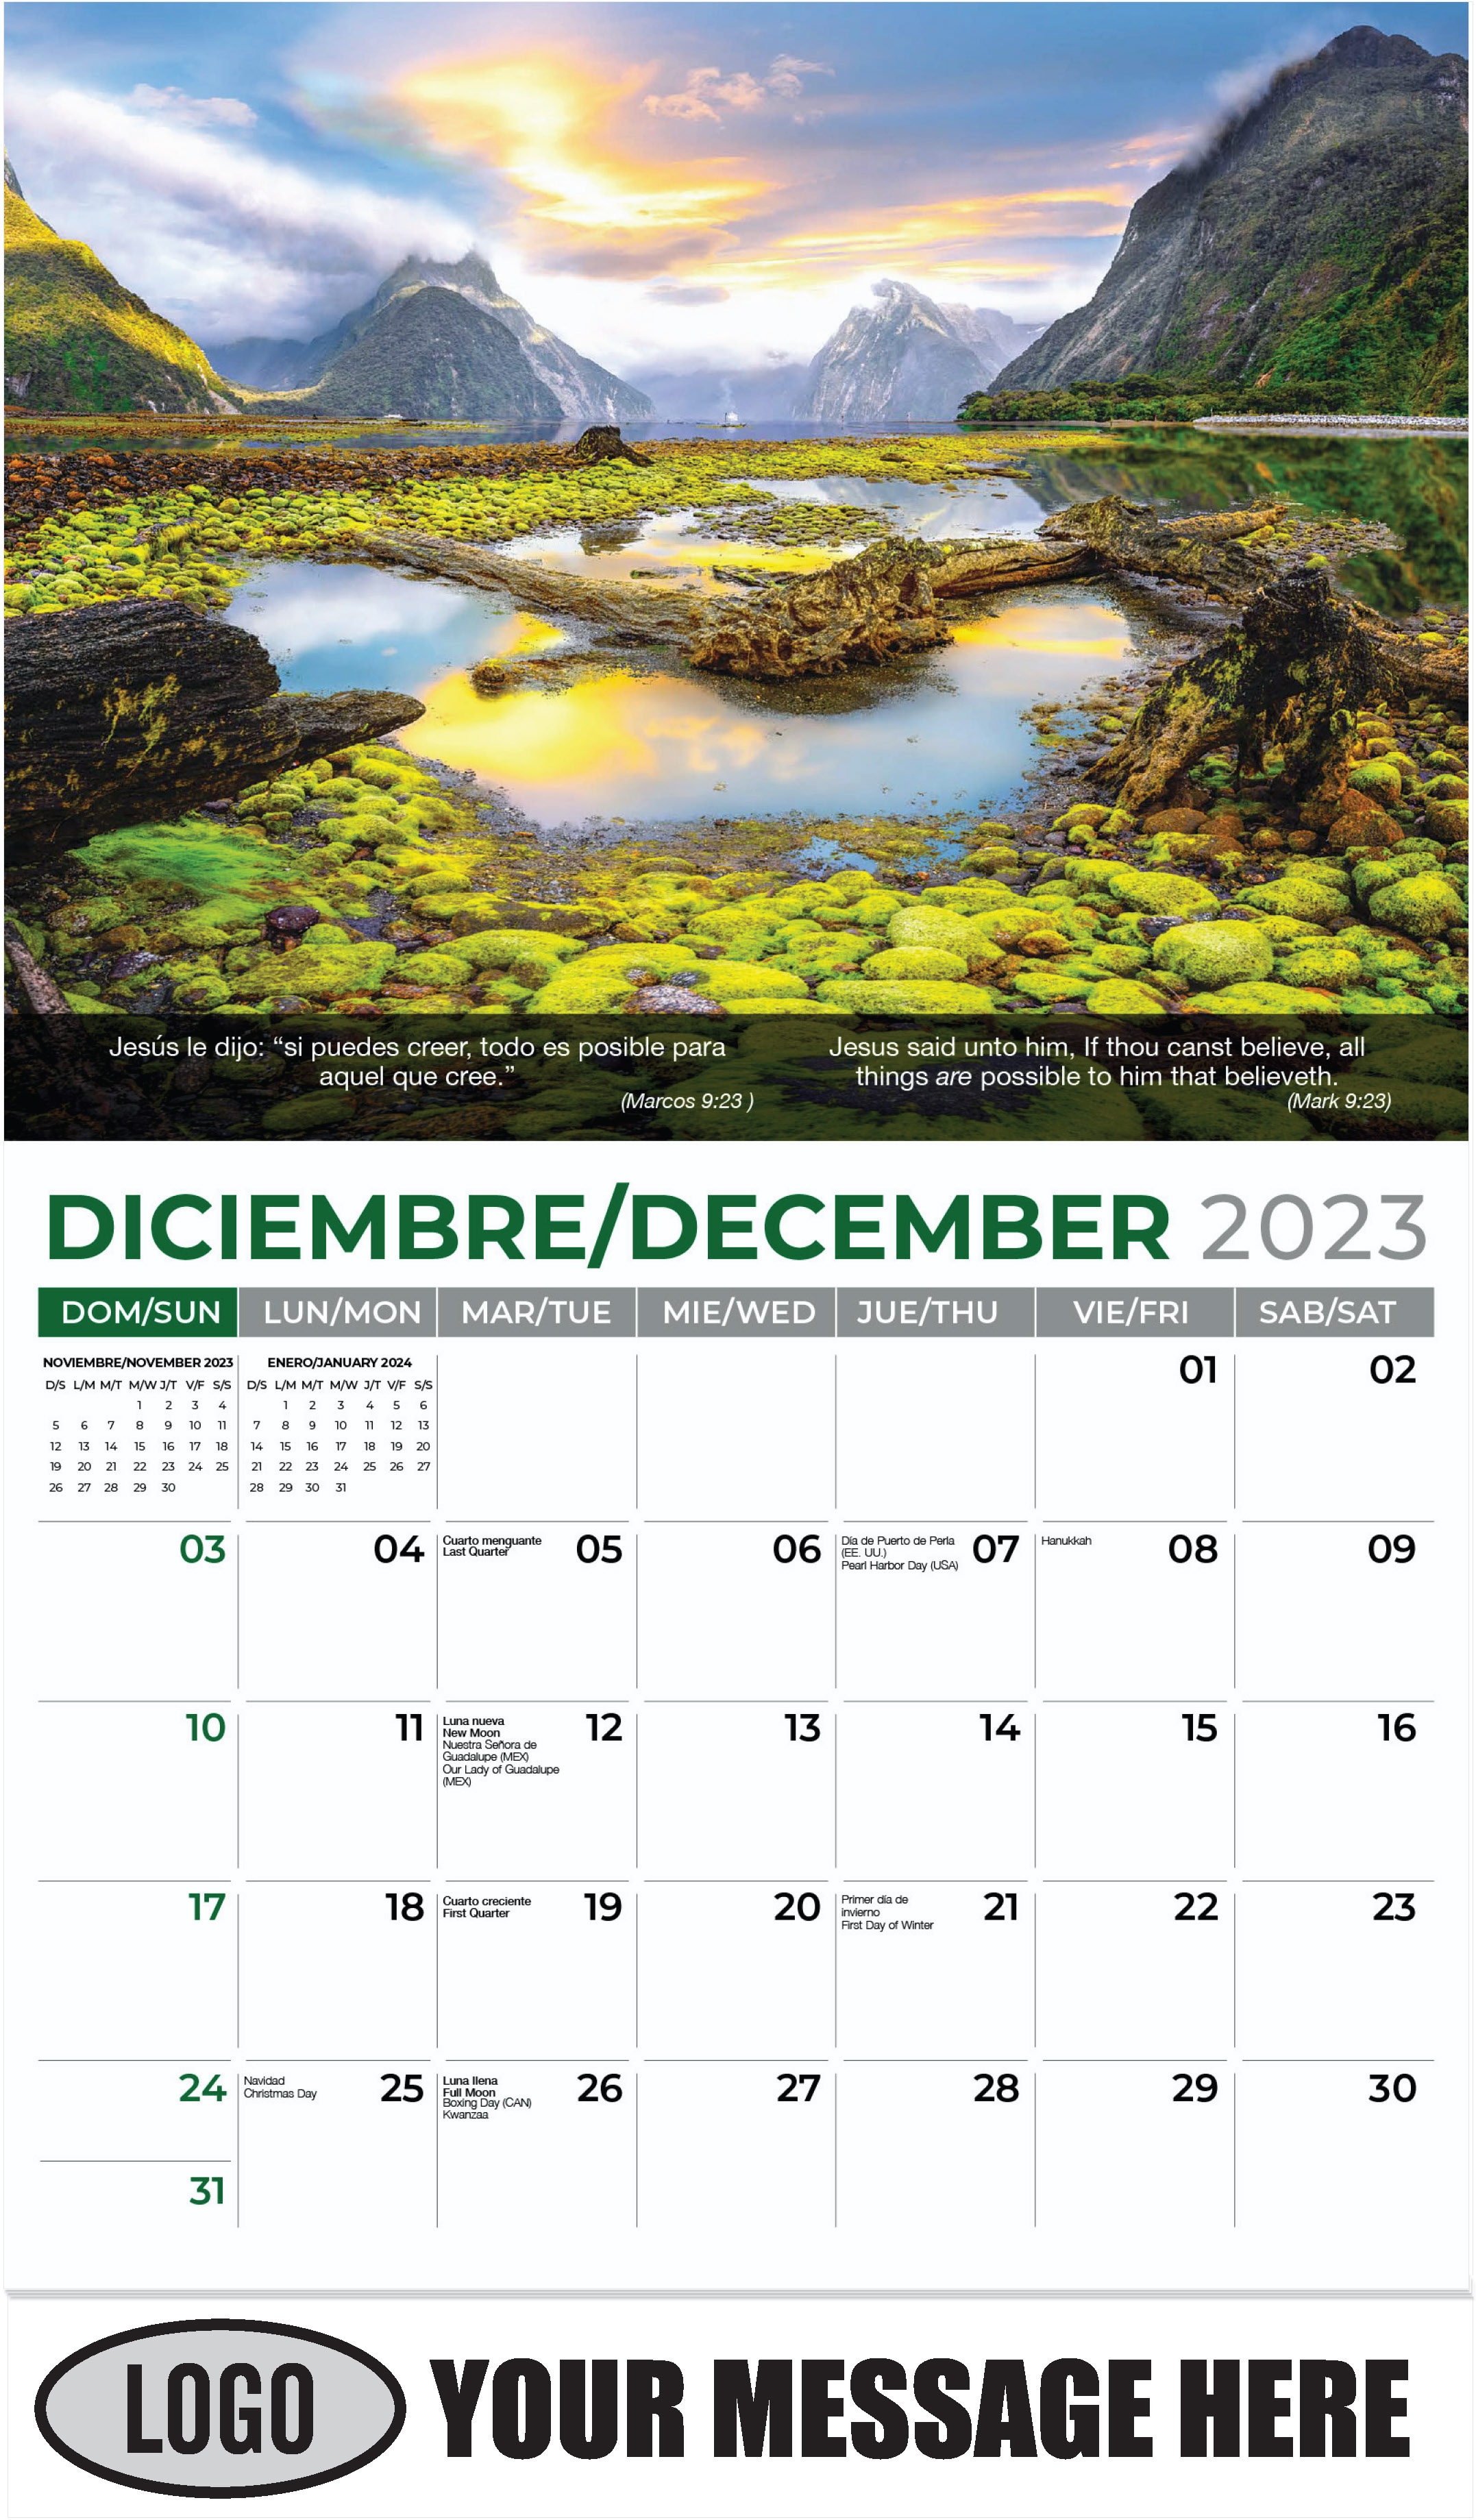 Land of Lord - December 2023 - Faith-Passages-Eng-Sp 2023 Promotional Calendar